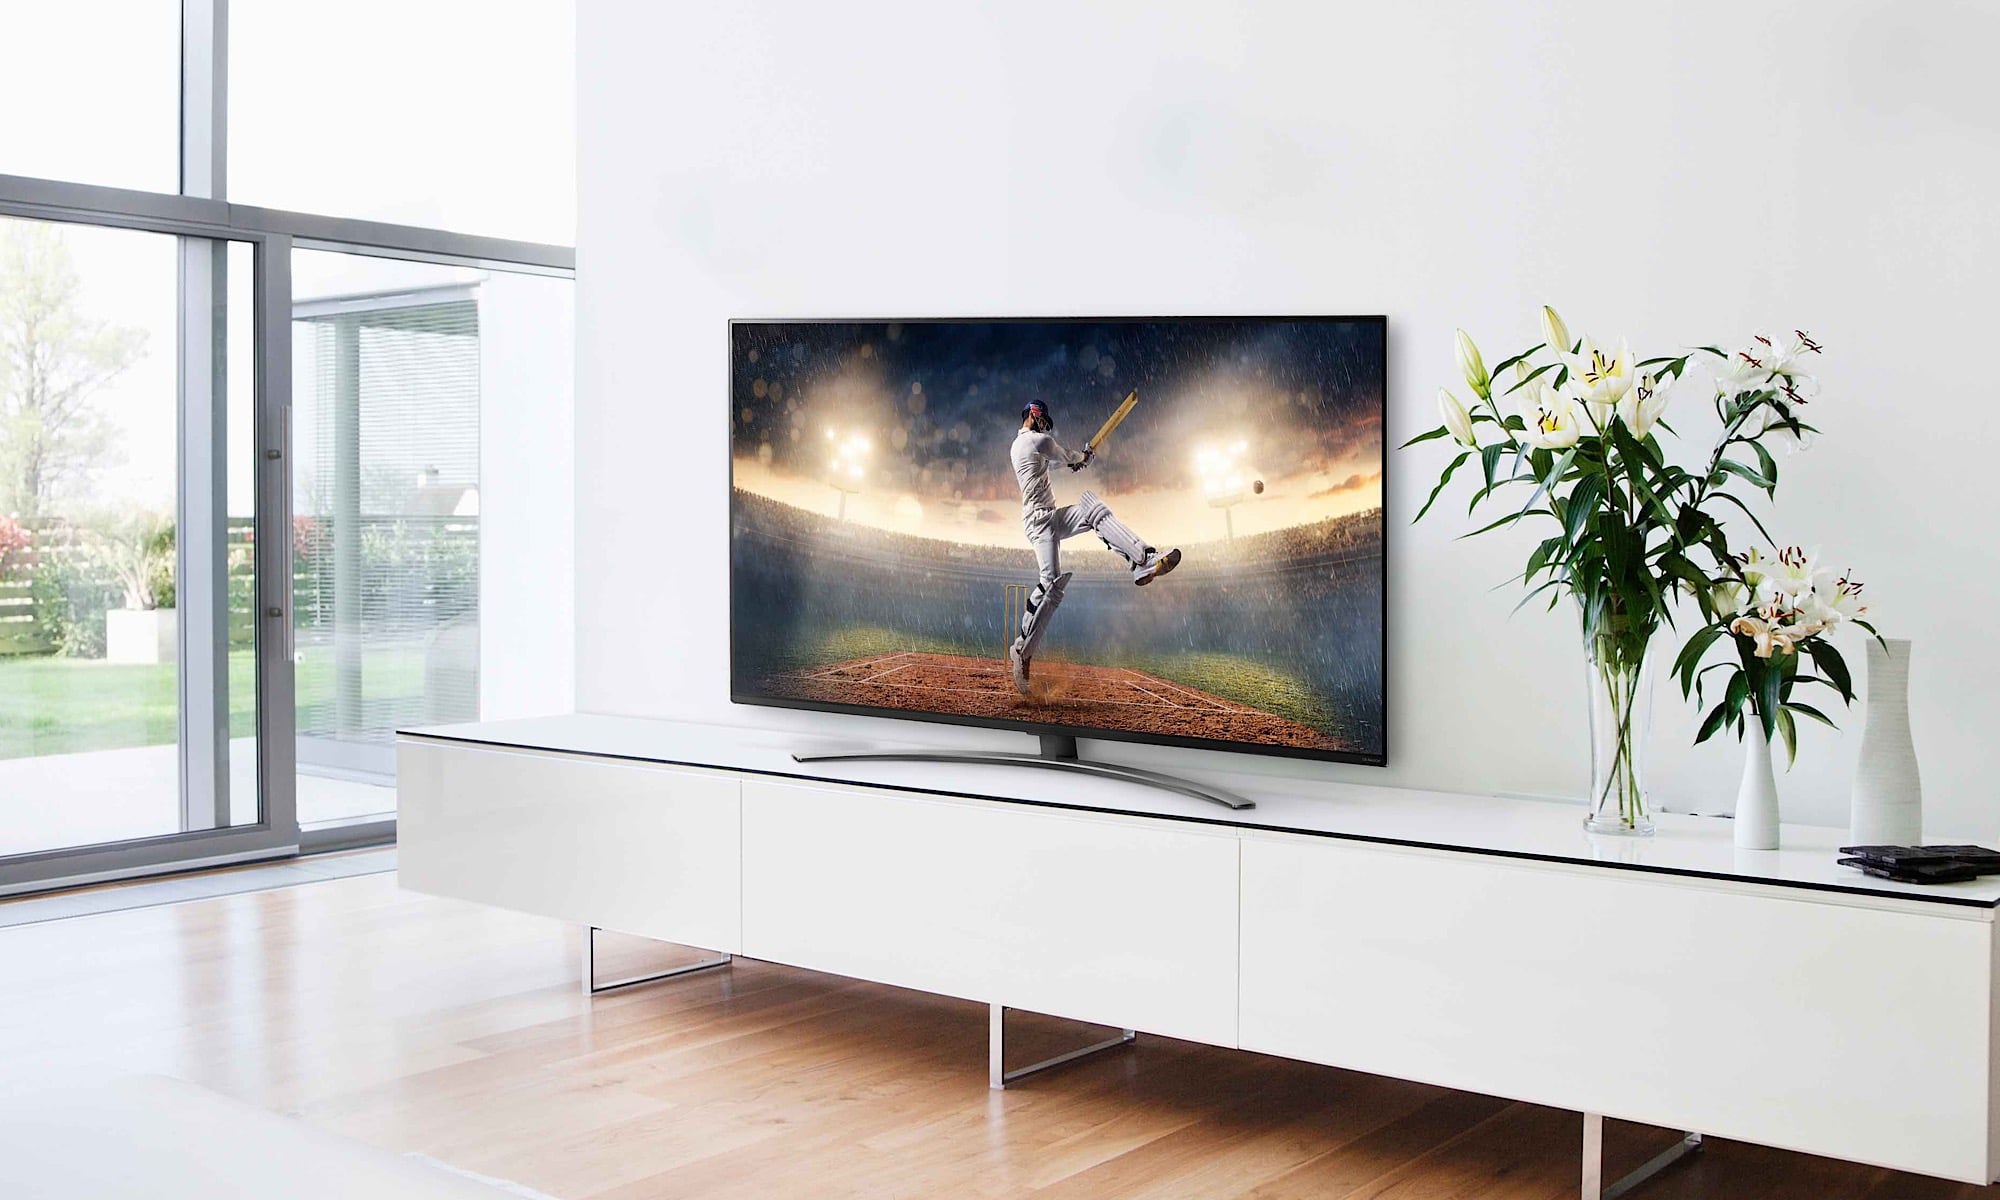 LG's Super UHD TV for 2019